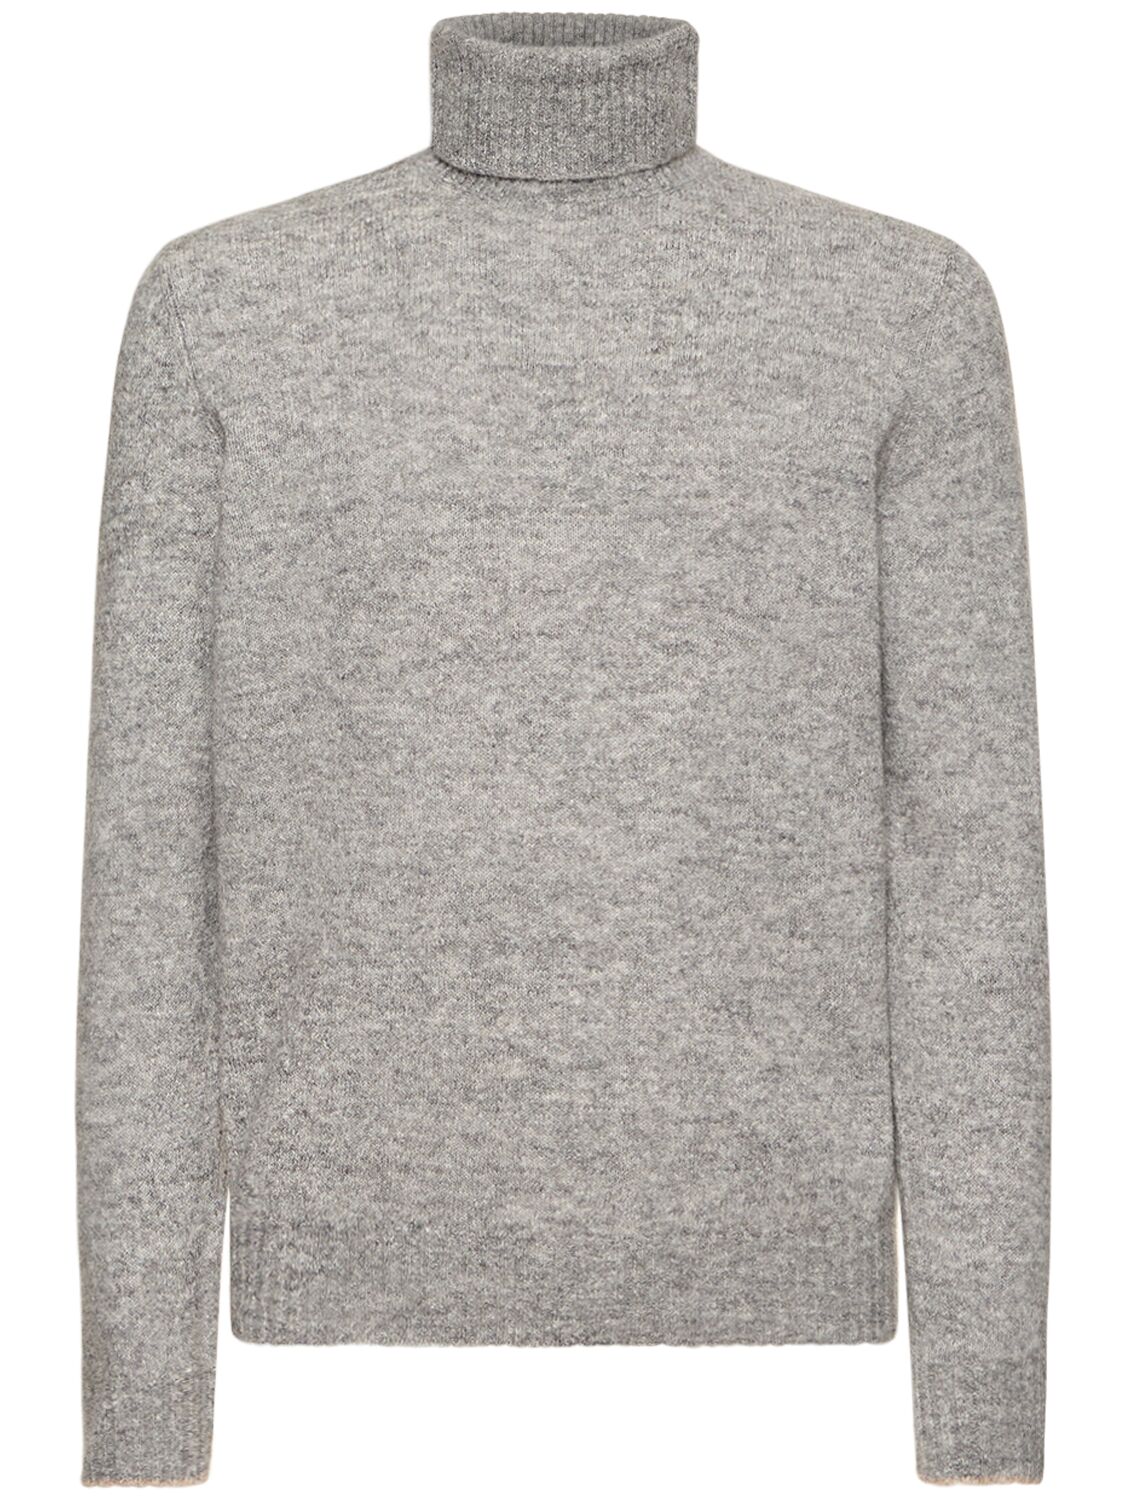 Image of Wool Blend Turtleneck Sweater